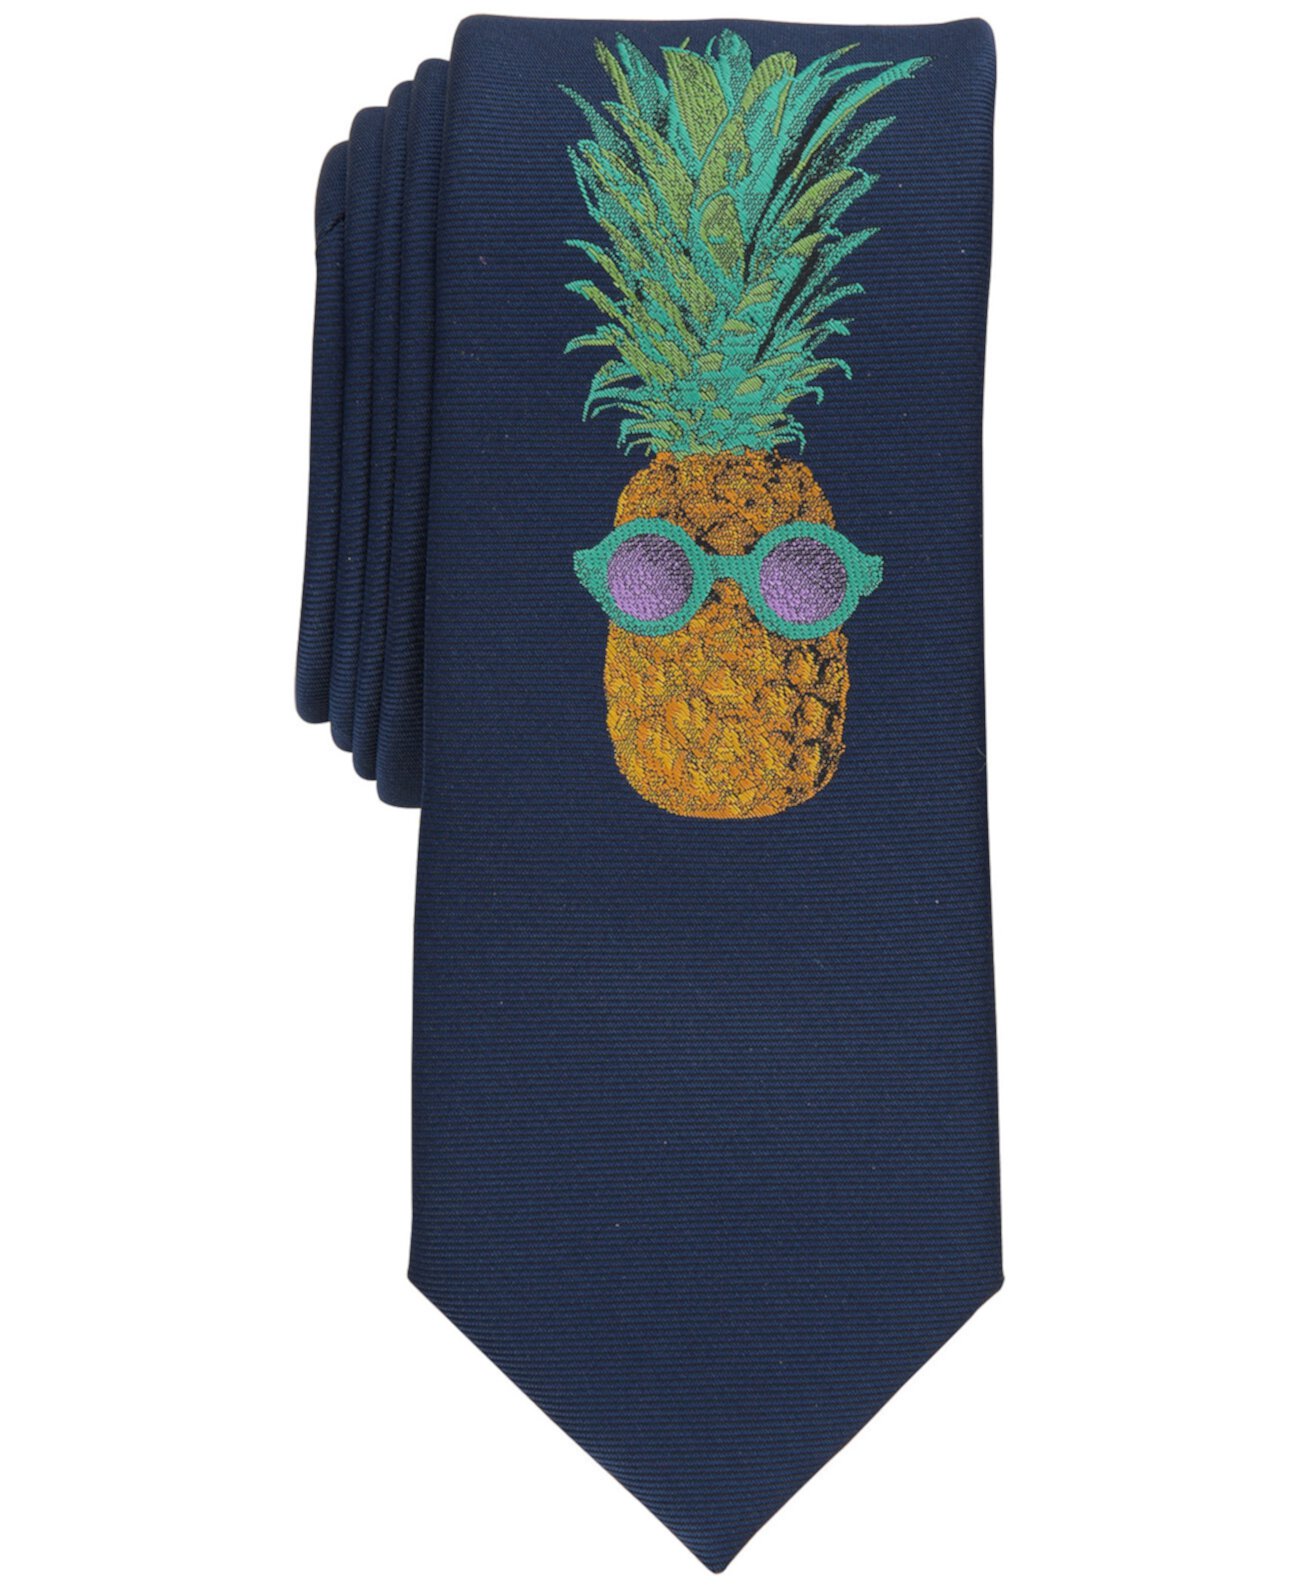 Мужской галстук Ruba Pineapple, созданный для Macy's Bar III